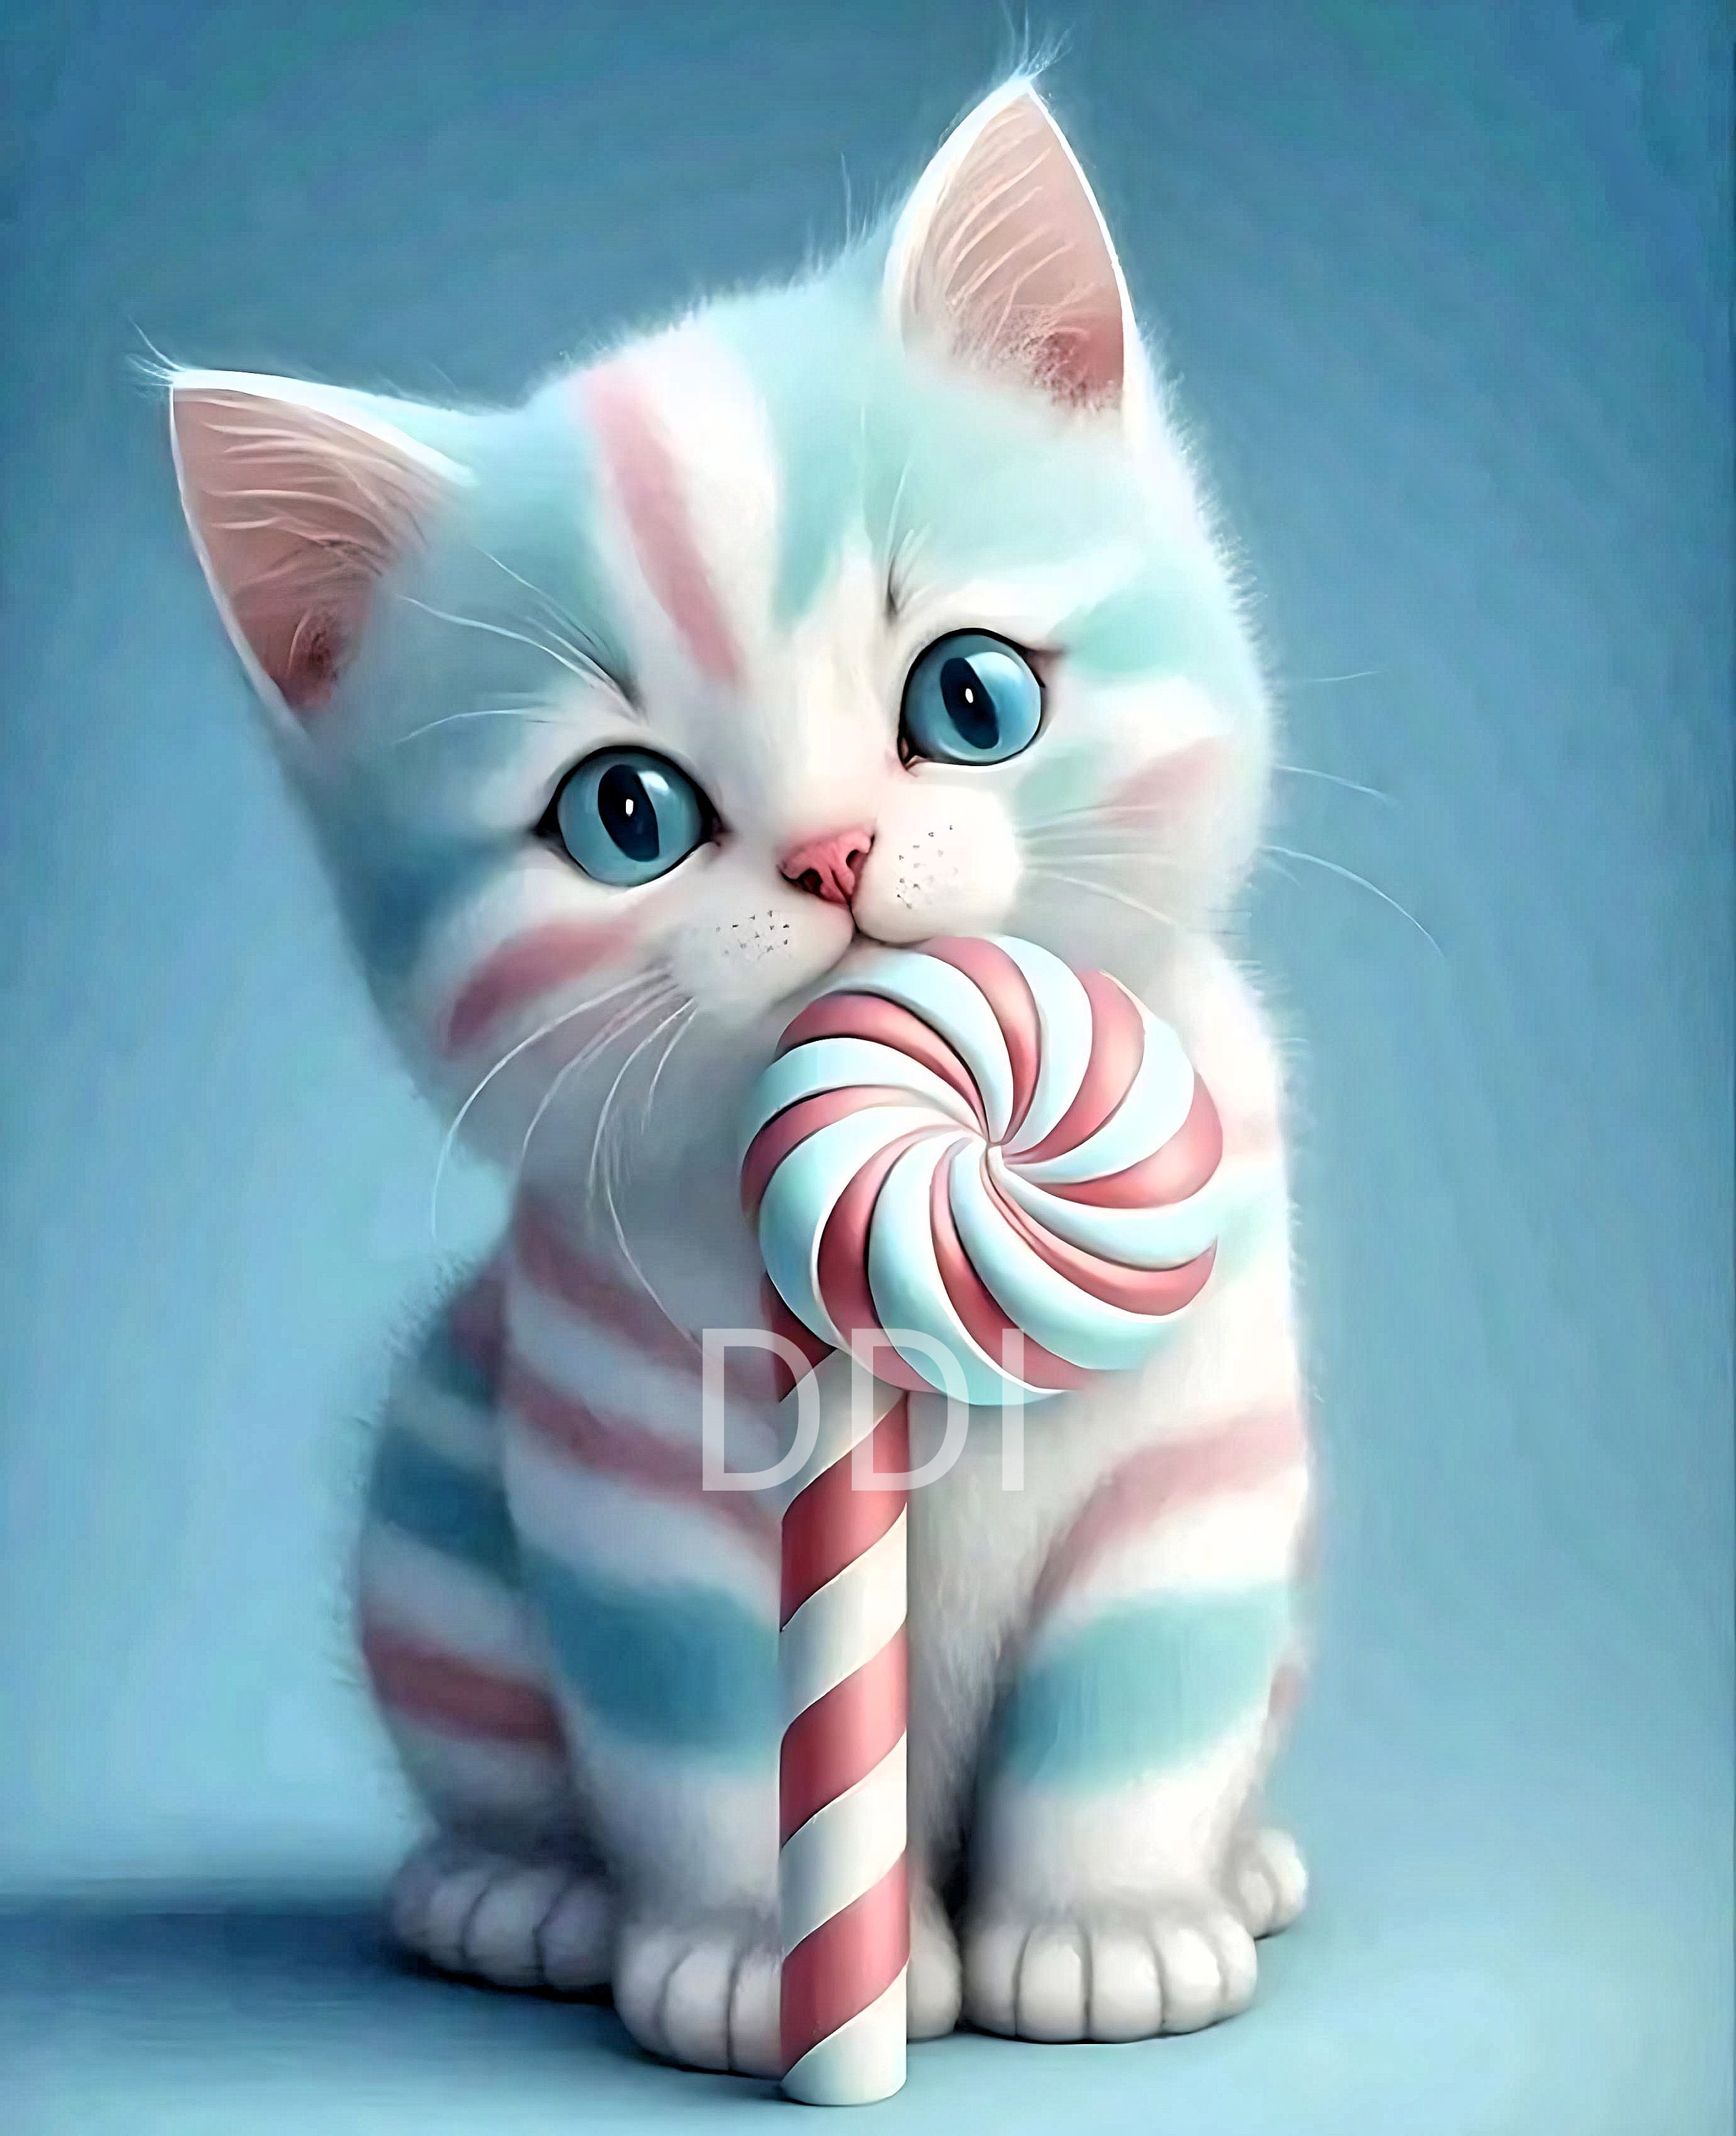 Cute Cartoon Cat - angry cat Wallpaper Download